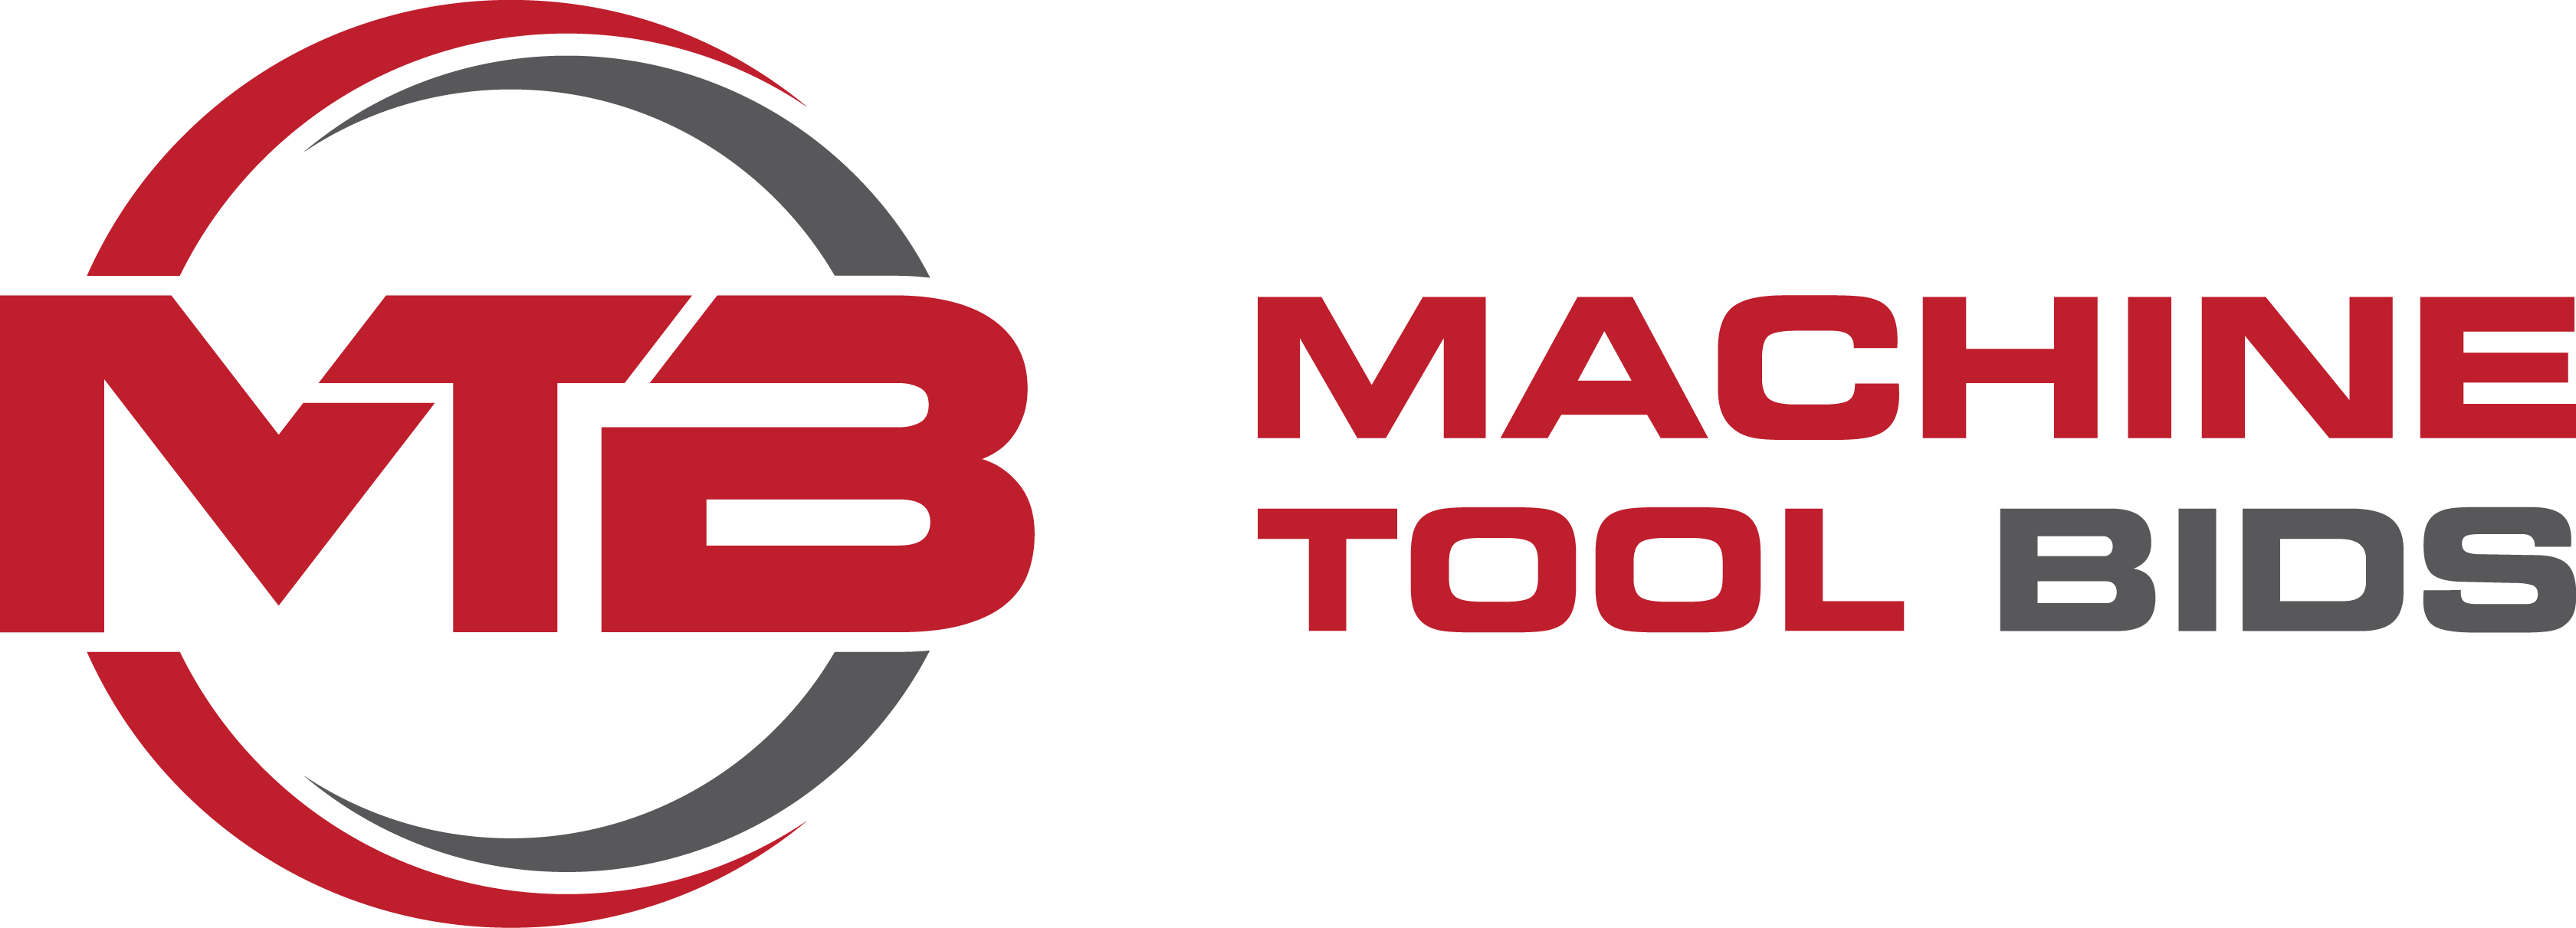 MACHINE TOOL BIDS logo